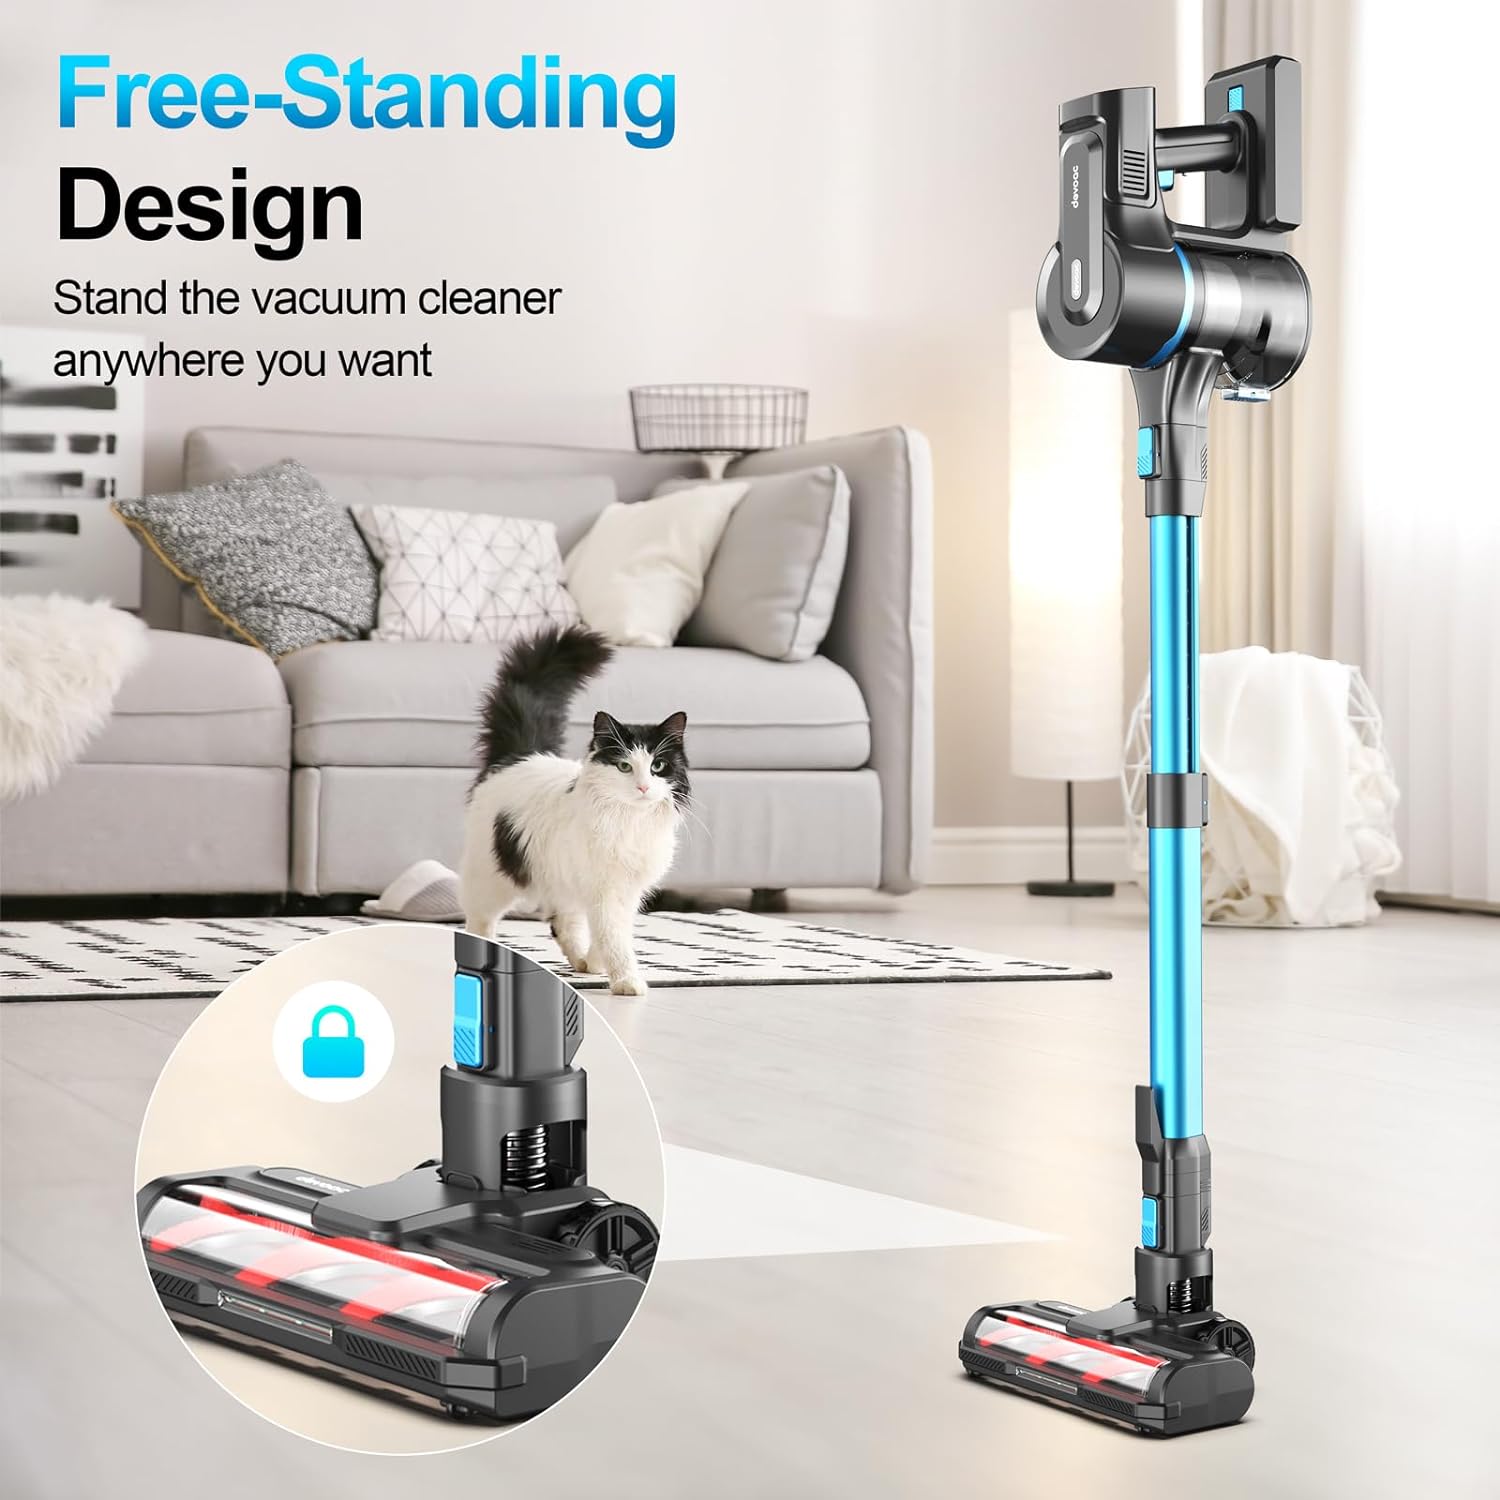 DEVOAC 28Kpa Cordless Vacuum Cleaner Review